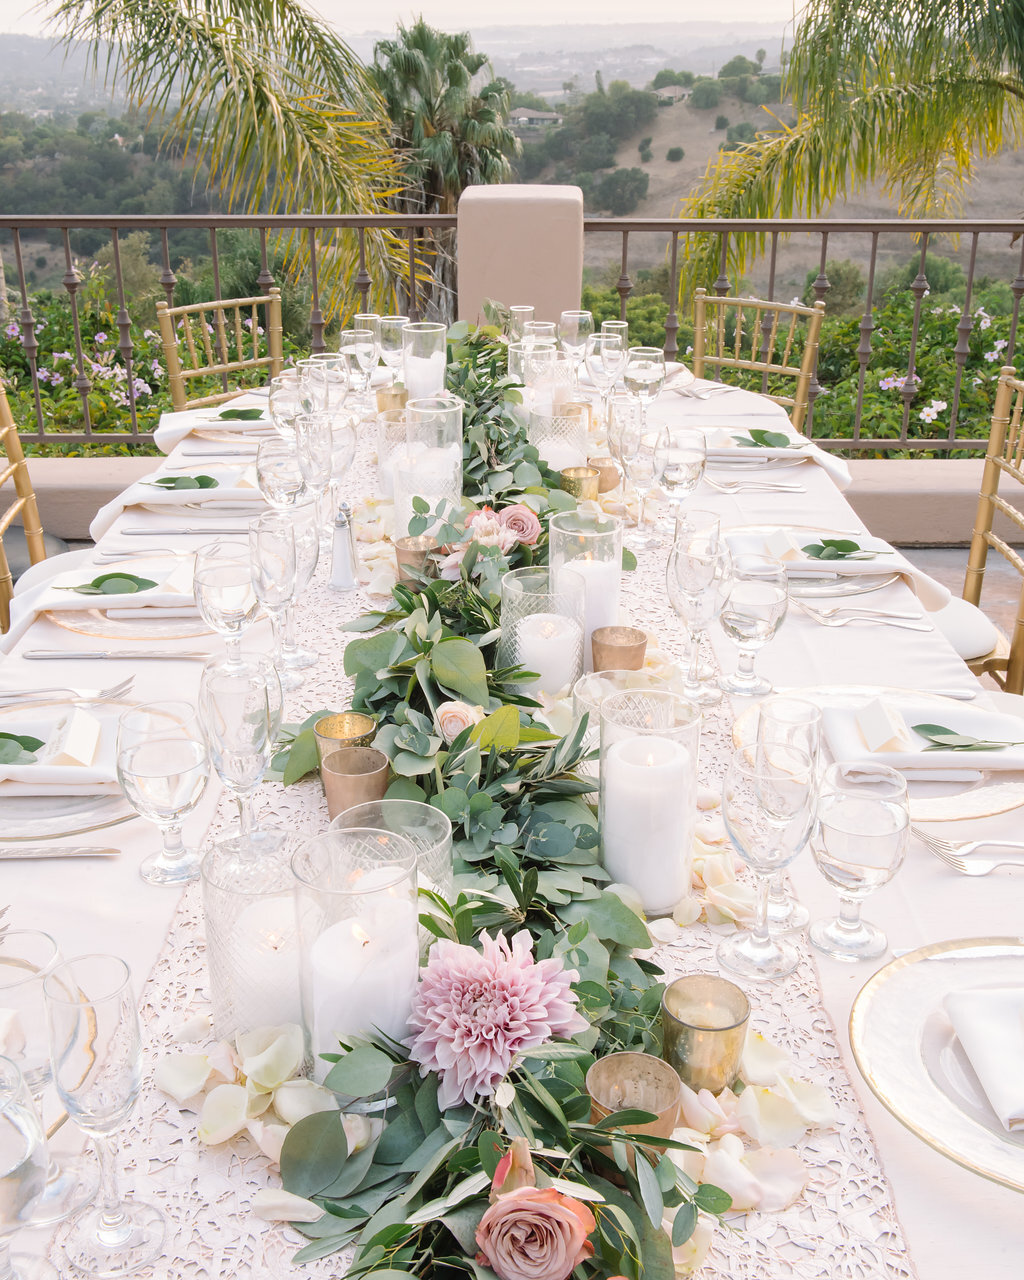 The most beautiful tablescape with breathtaking views 🤍​​​​​​​​​.
.
Wedding planner &amp; designer: @trinaschmidtweddings
Venue: @villaveranosb
Photography: @elizabethburgiphotography
Floral design: @cocorosedesign